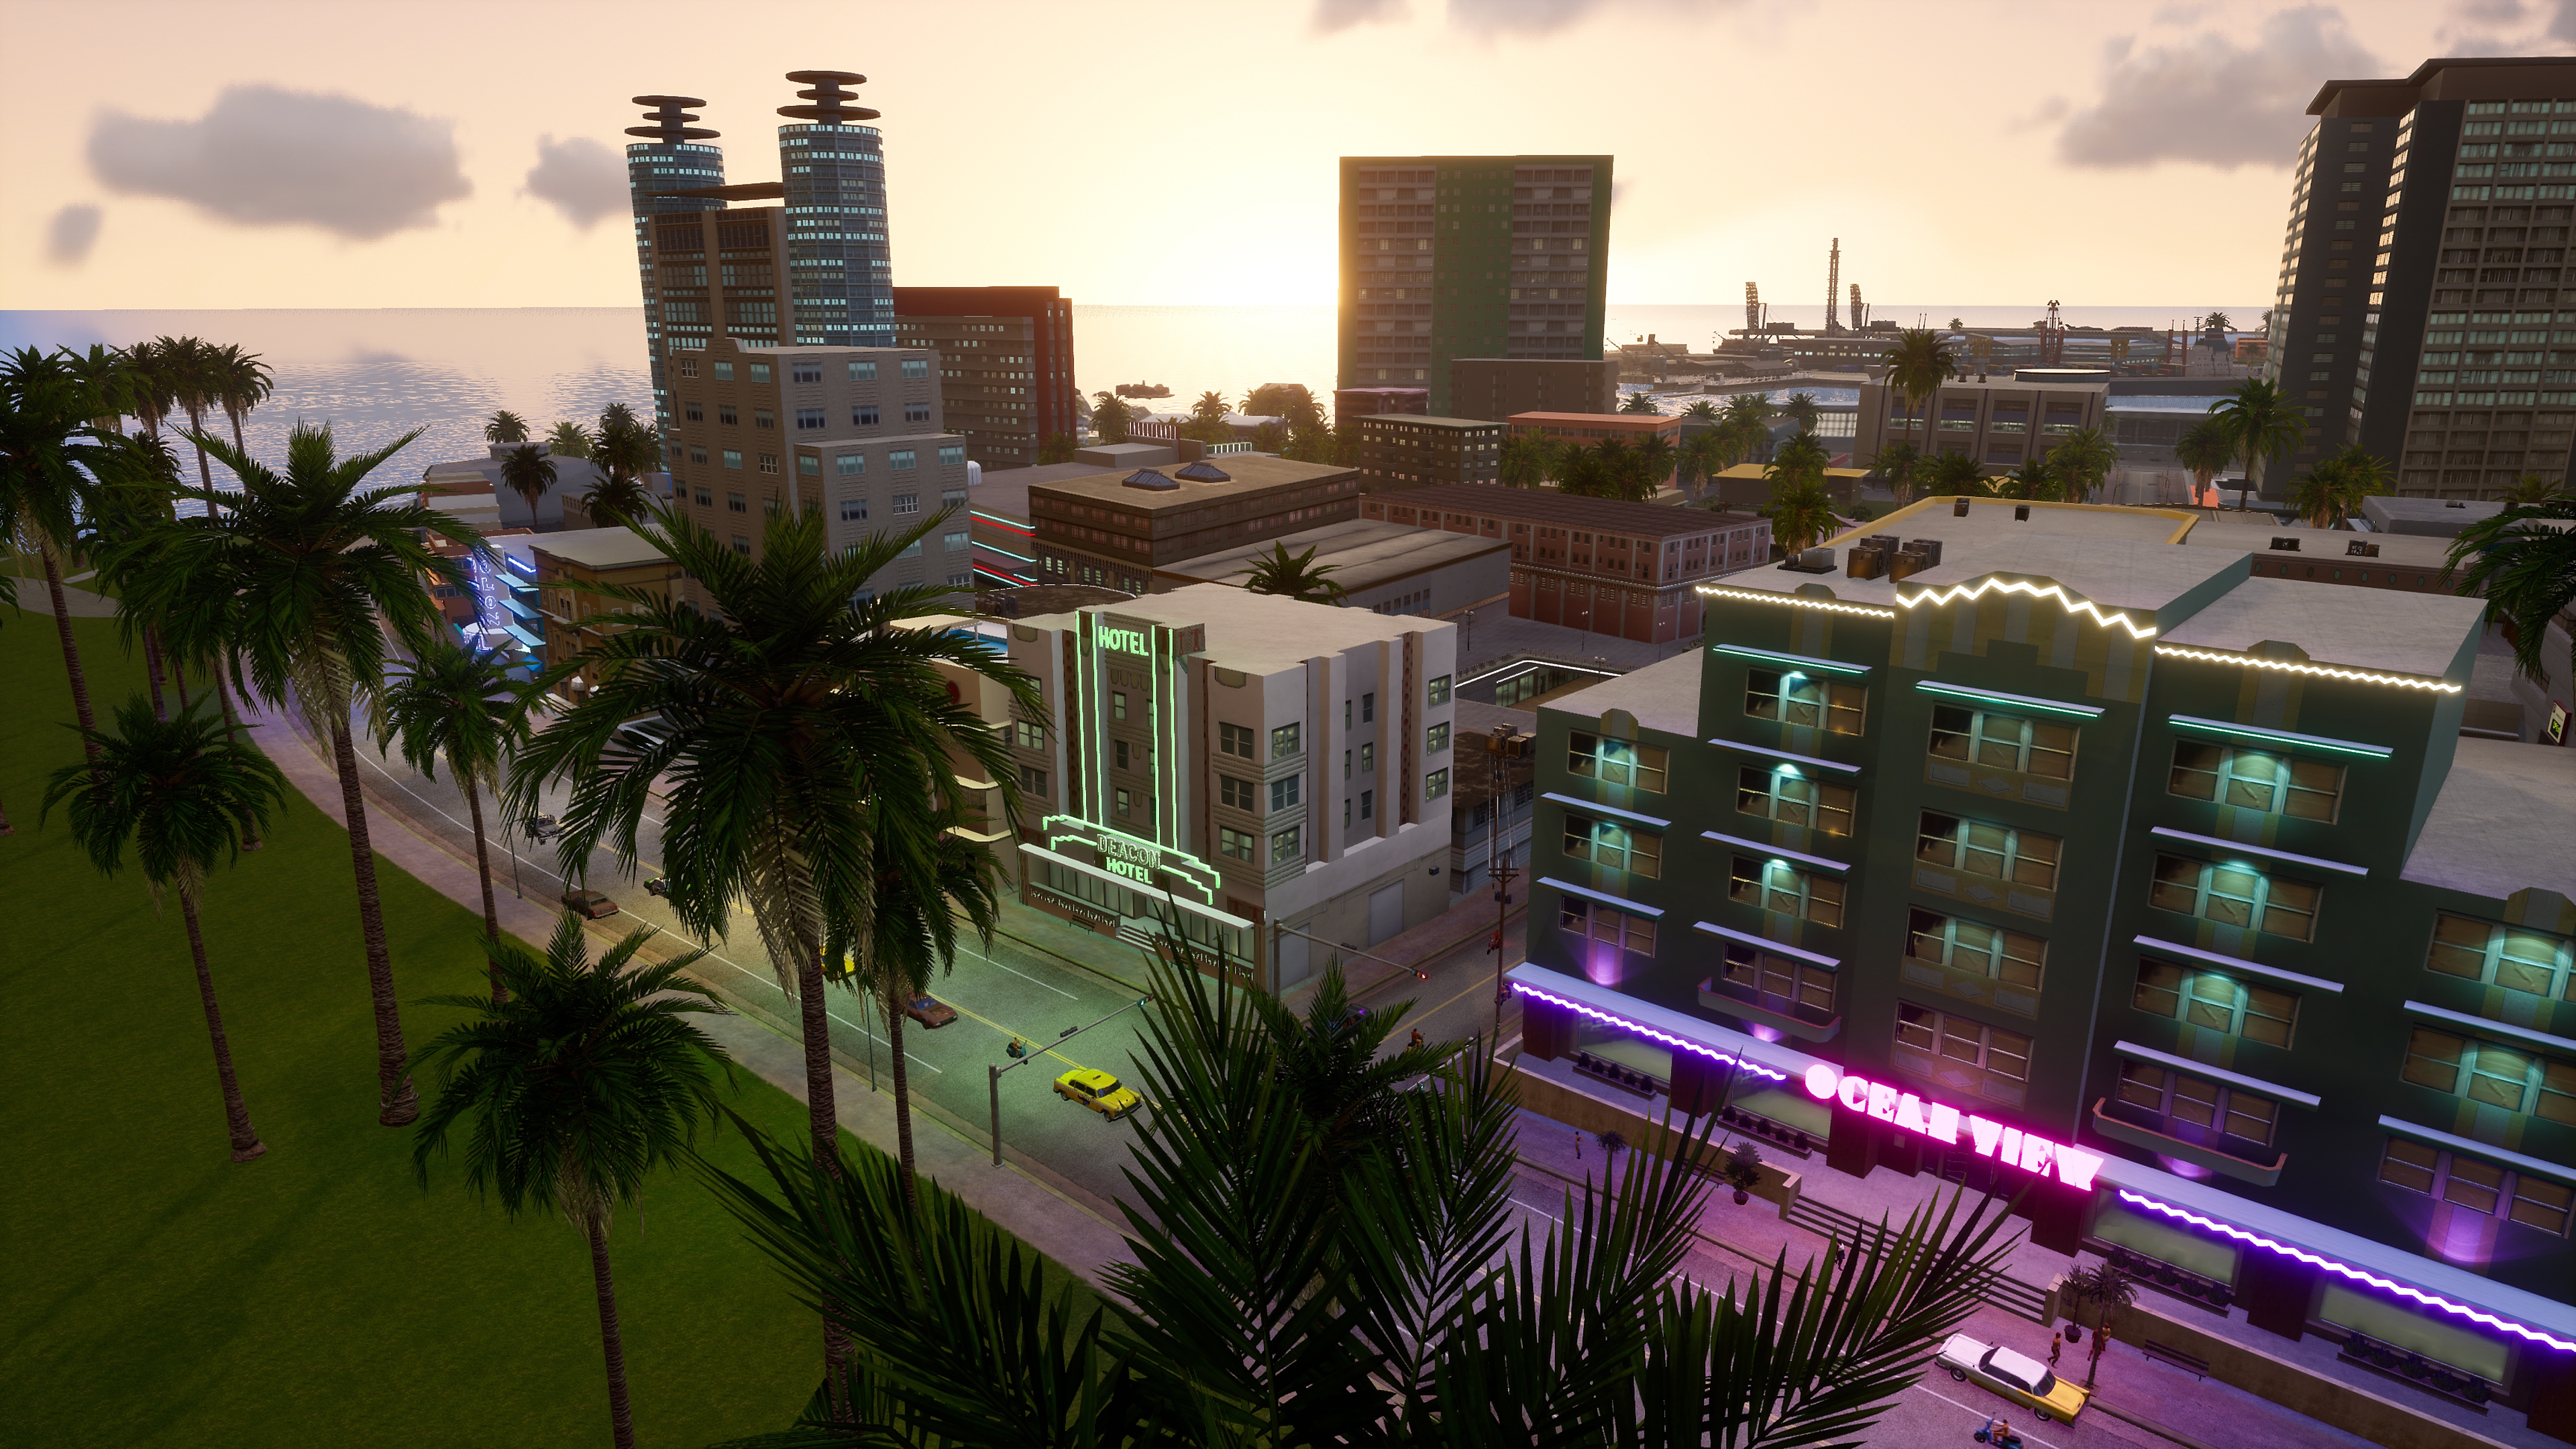  Grand Theft Auto: Vice City – снимок экрана 2 из галереи